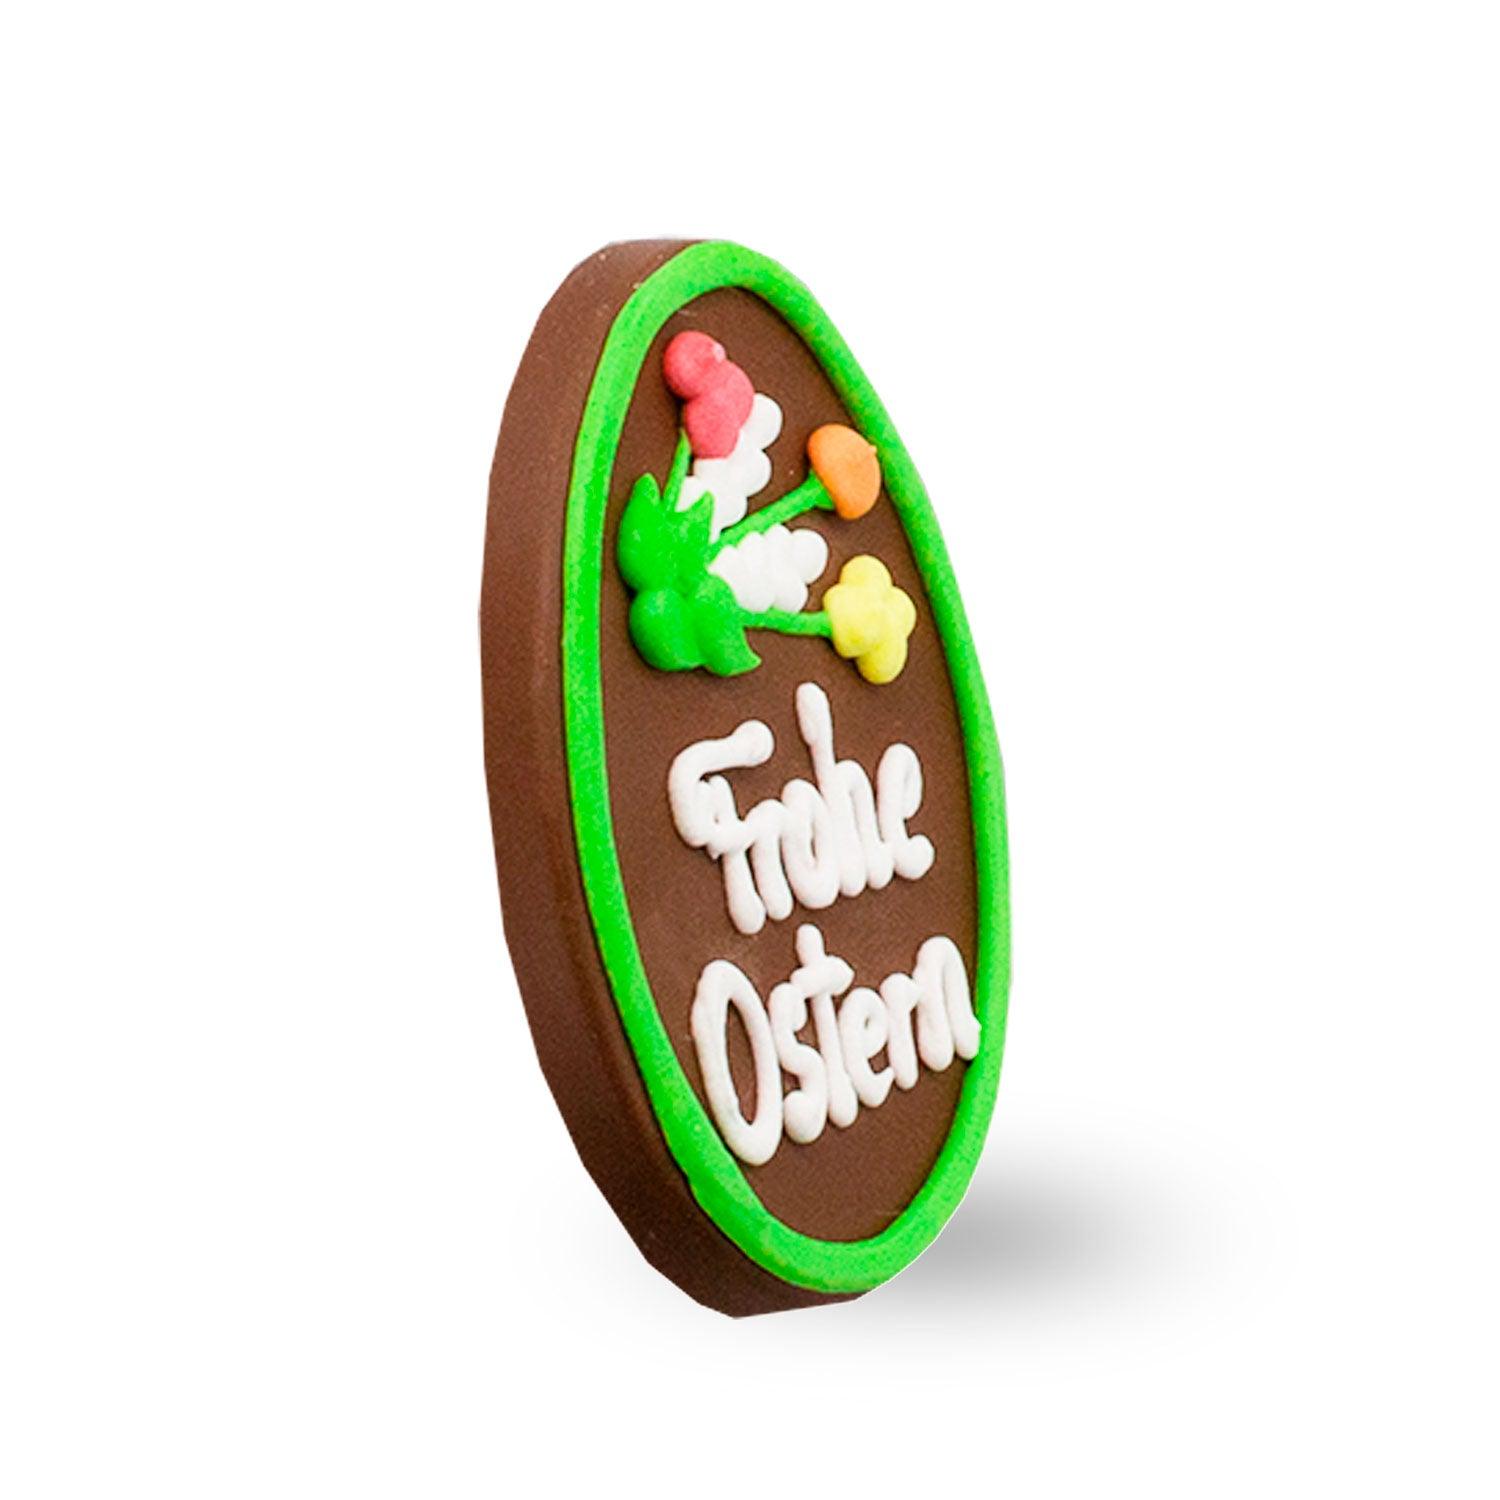 Oster-Schokolade "Frohe Ostern" - bavariashop - mei LebensGfui